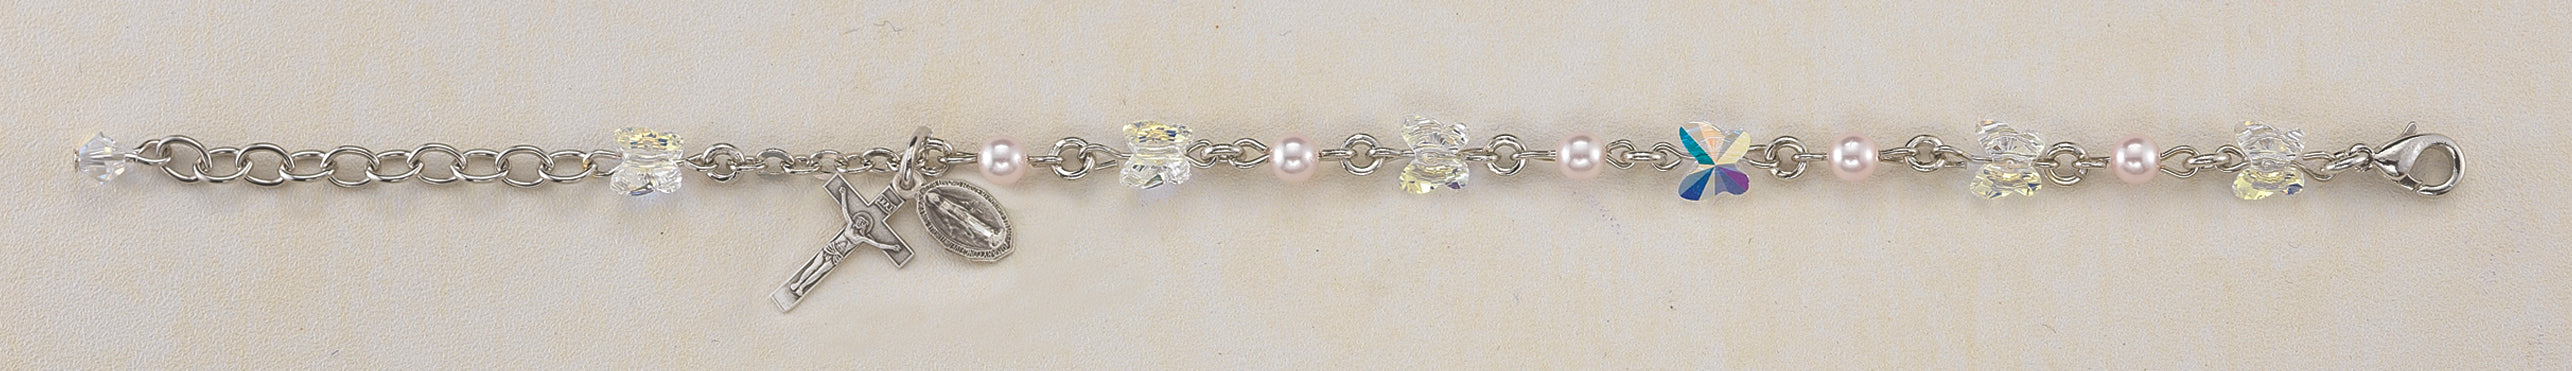 Aurora Swarovski Butterfly Crystal Bead Bracelet